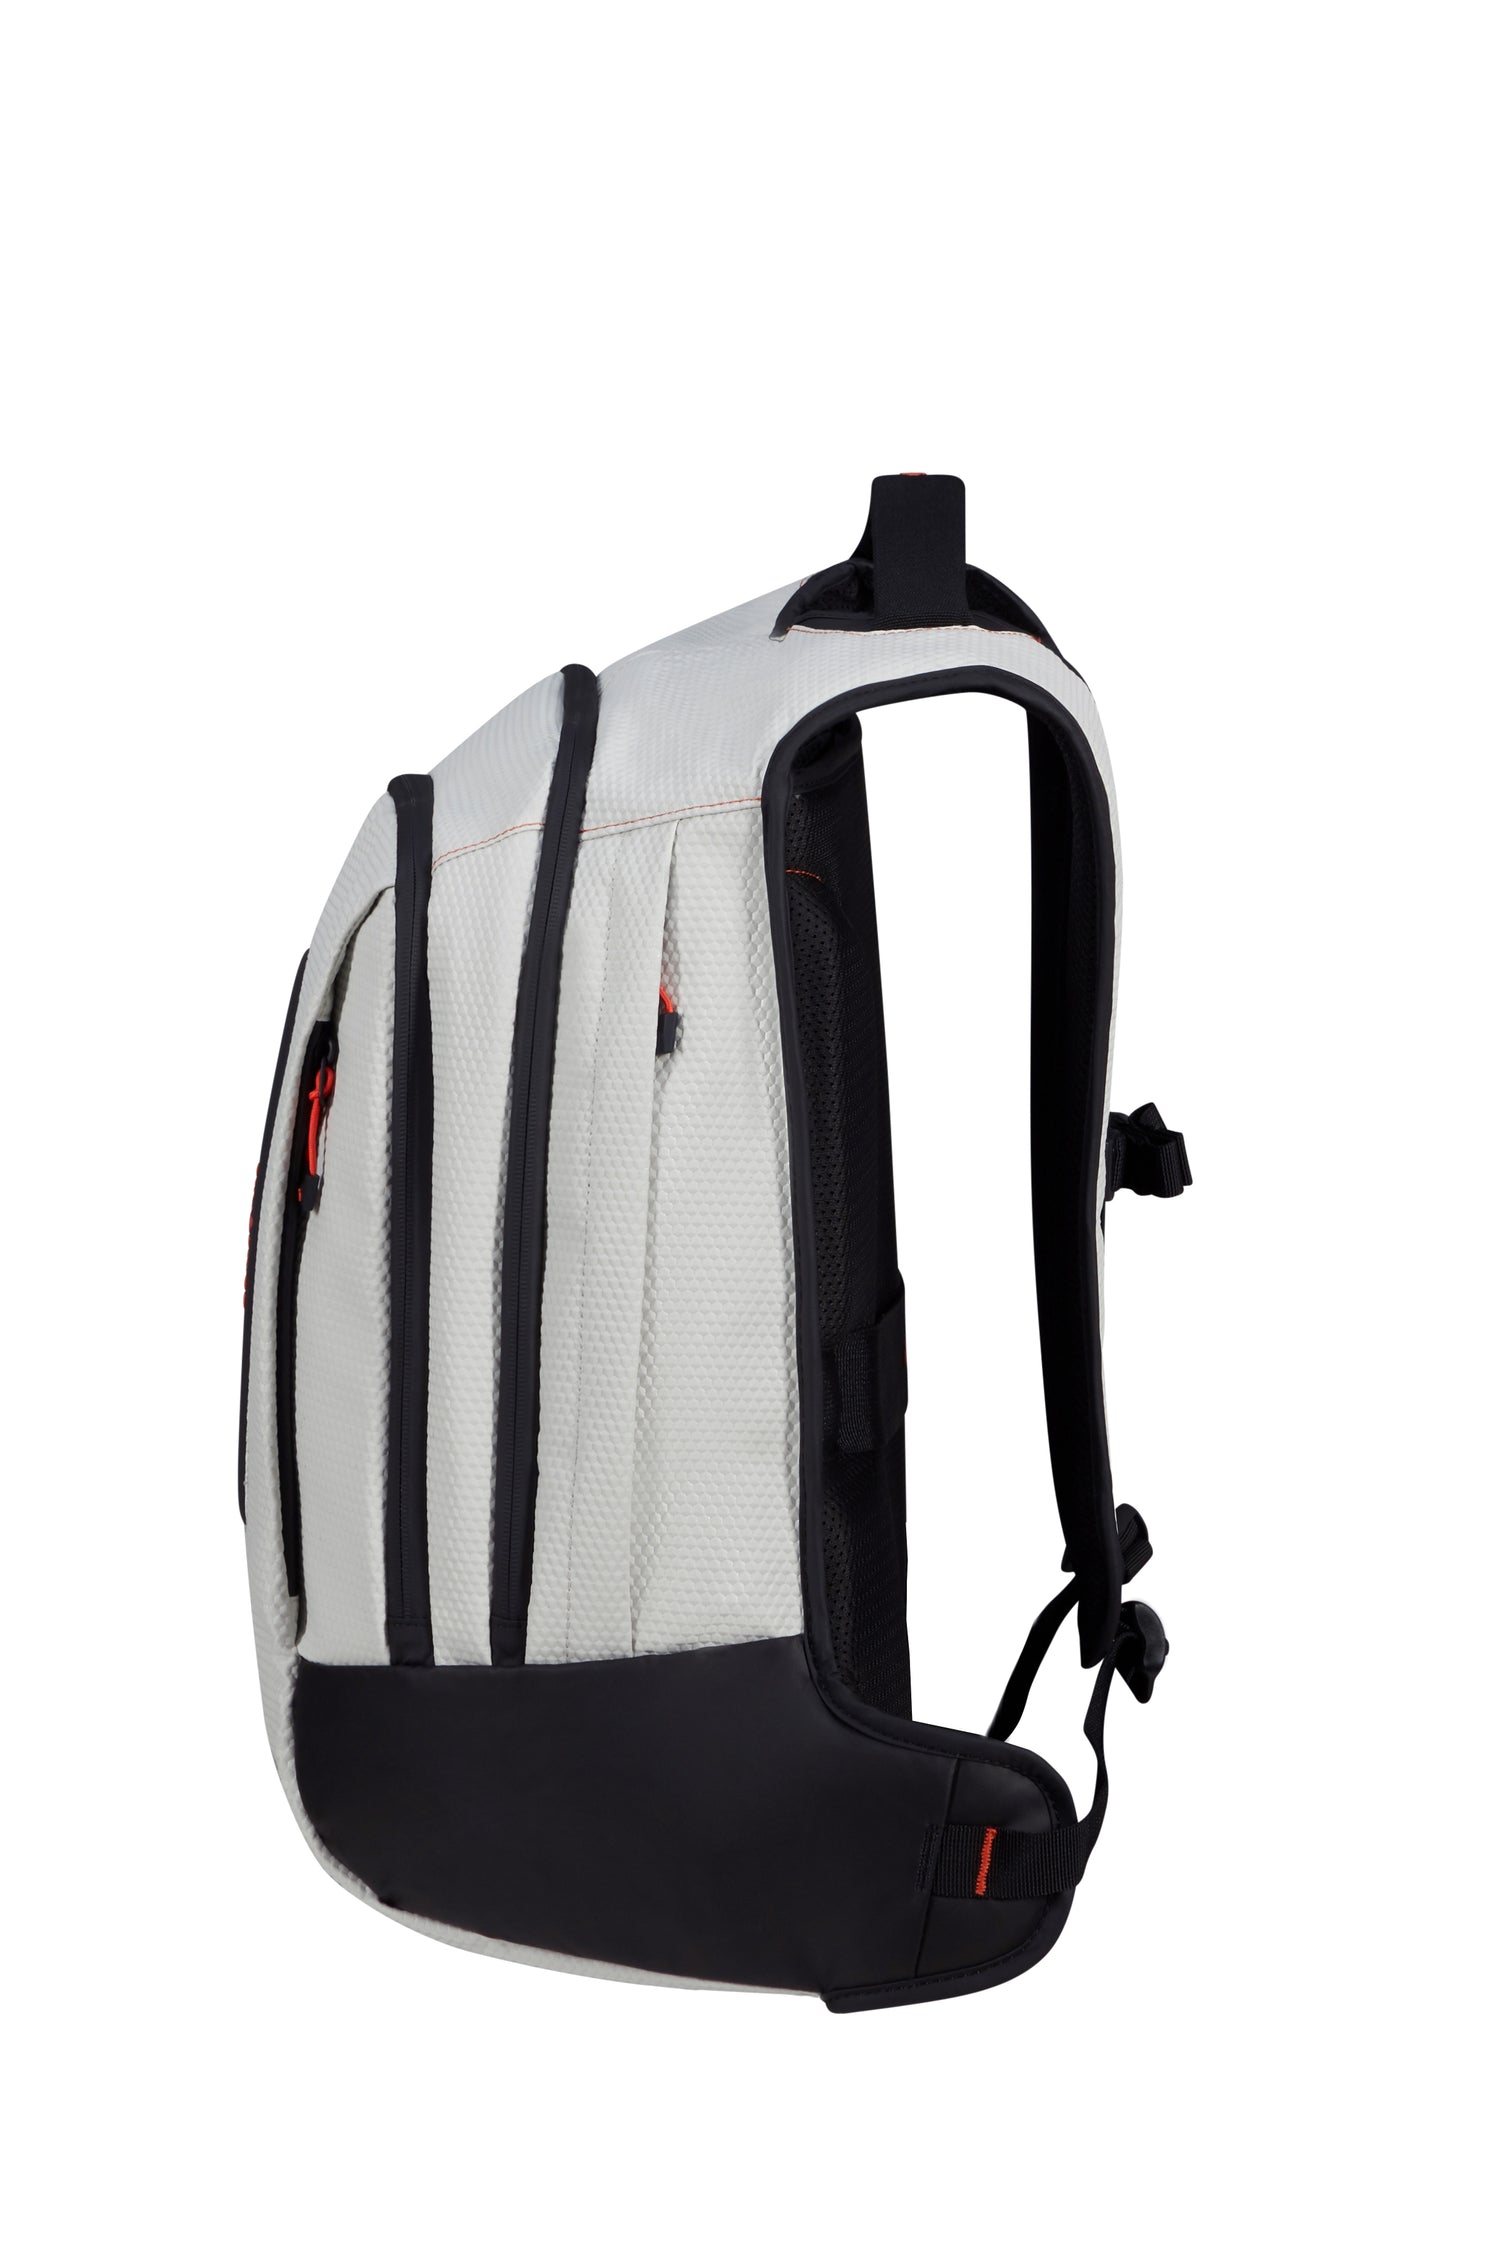 Samsonite Ecodiver Large Laptop Backpack 17.3”